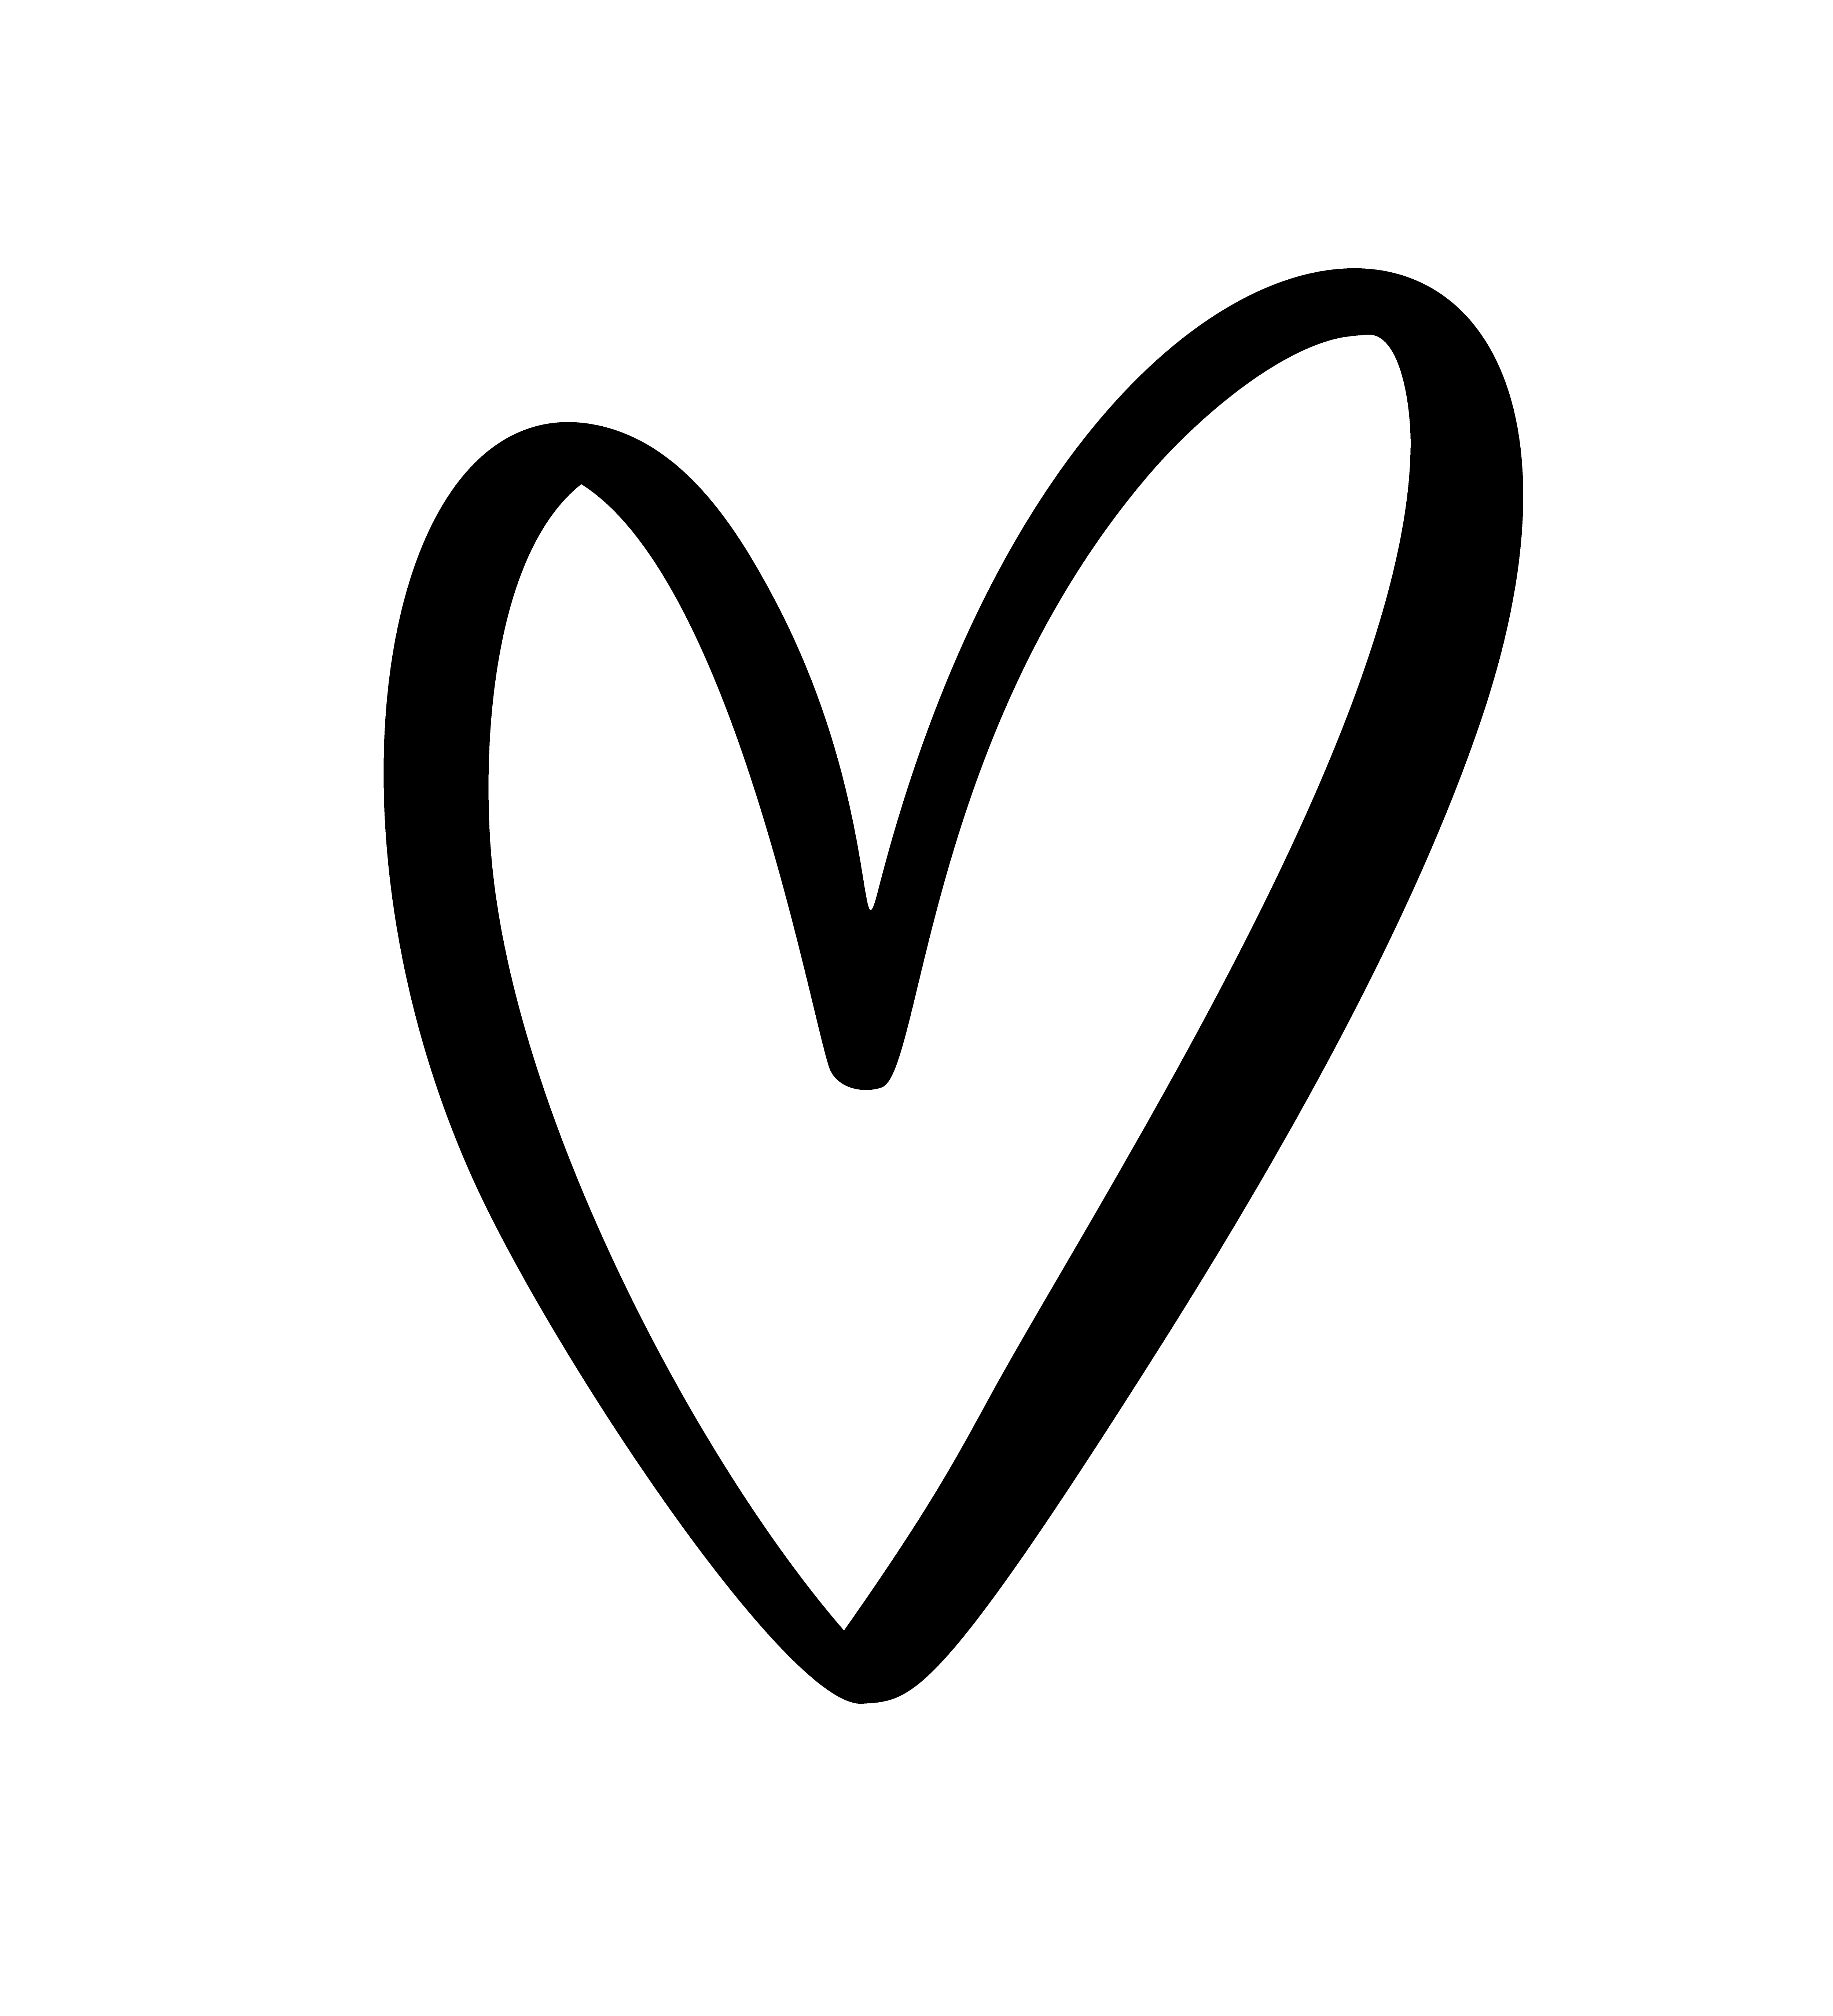 Calligraphic love heart sign - Download Free Vectors ...